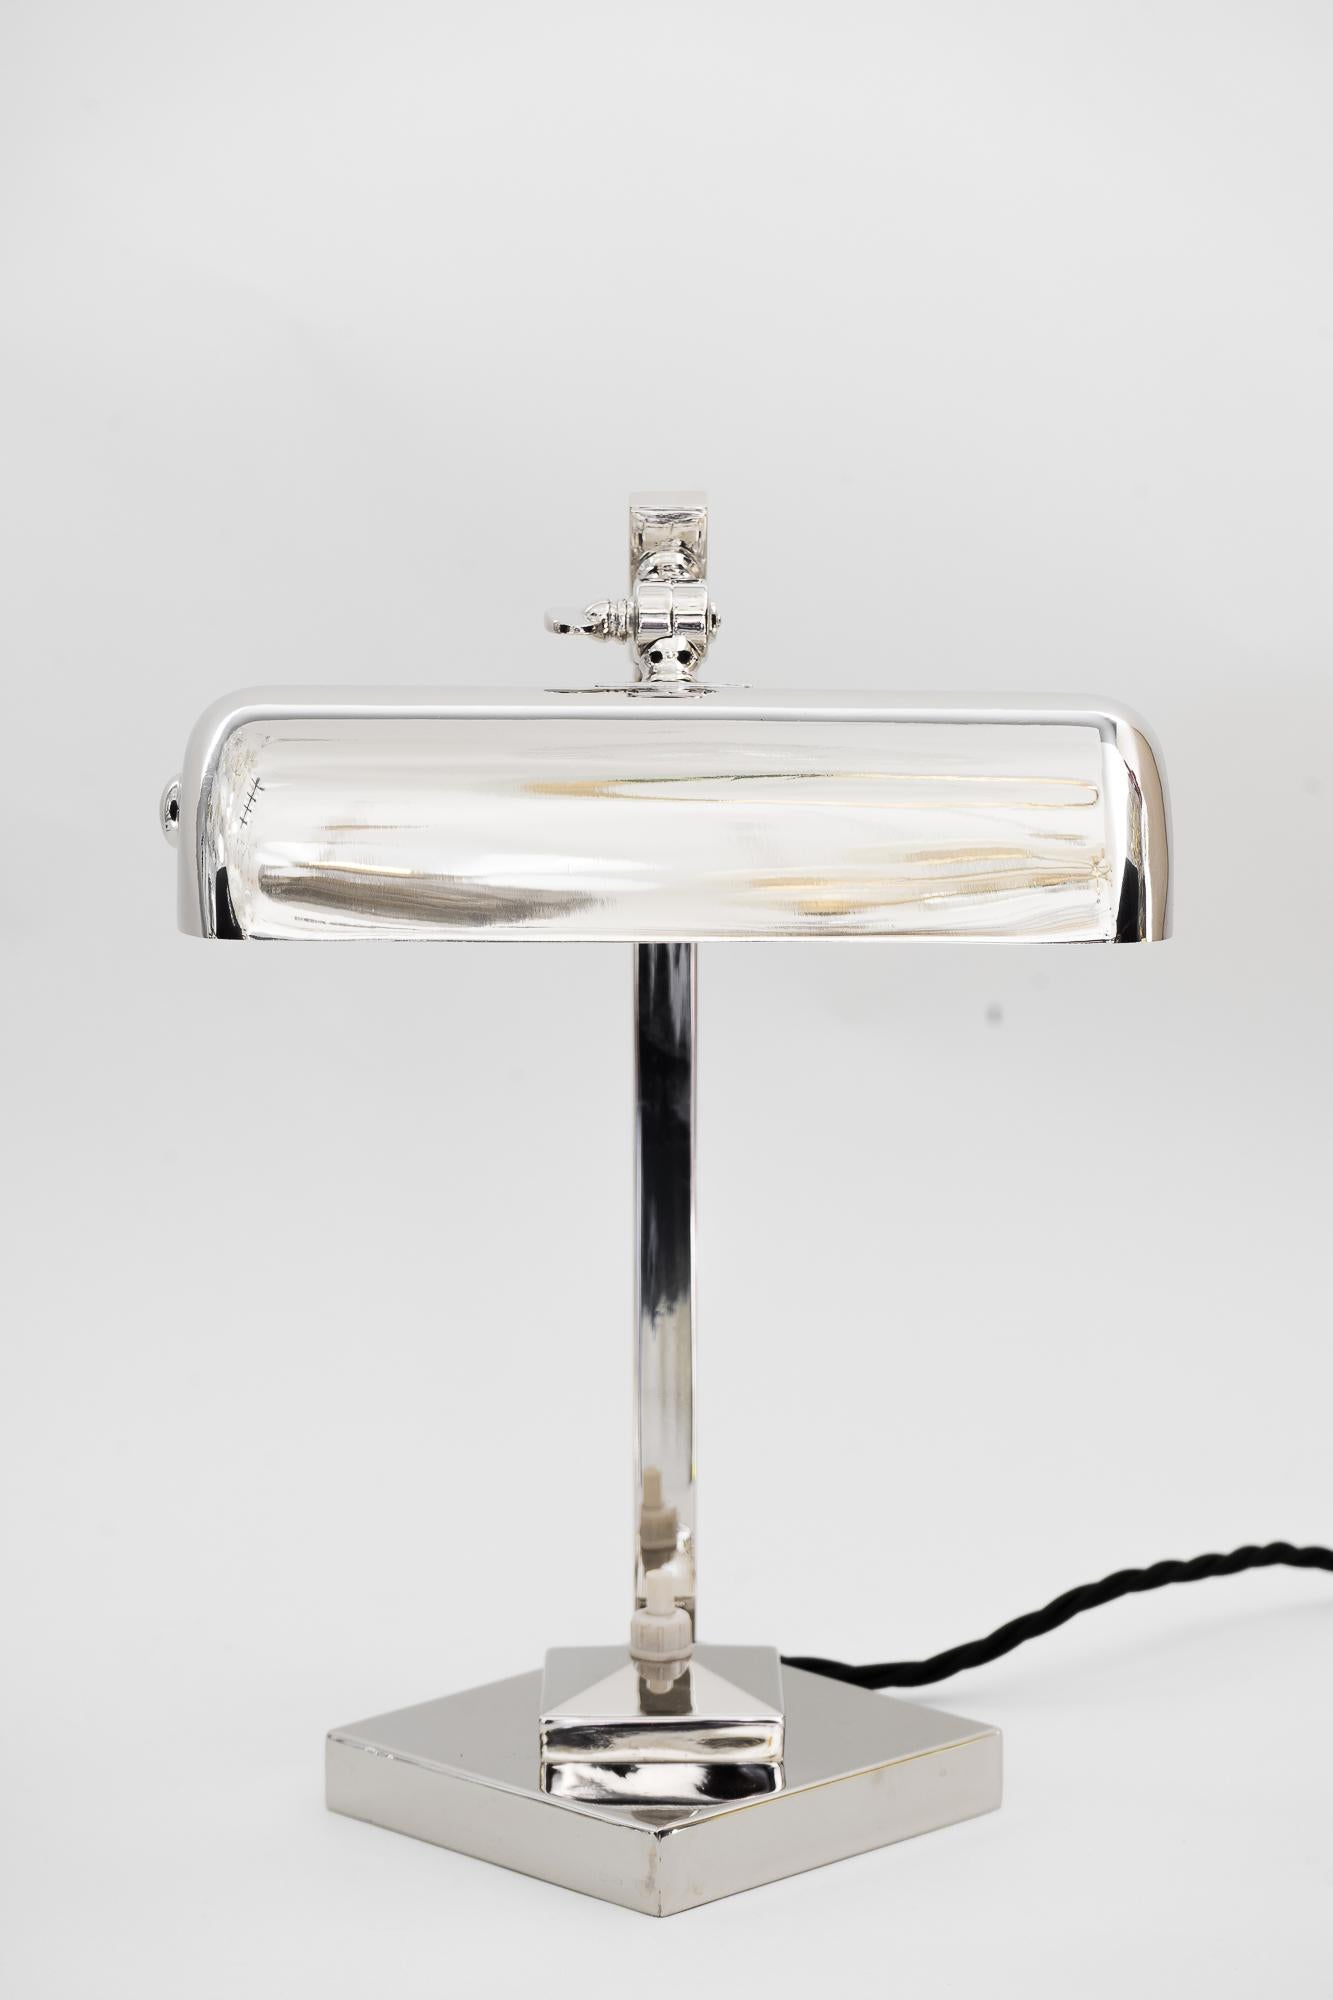 Swiveling Art Deco table lamp, circa 1920s
Brass (nickel-plated).